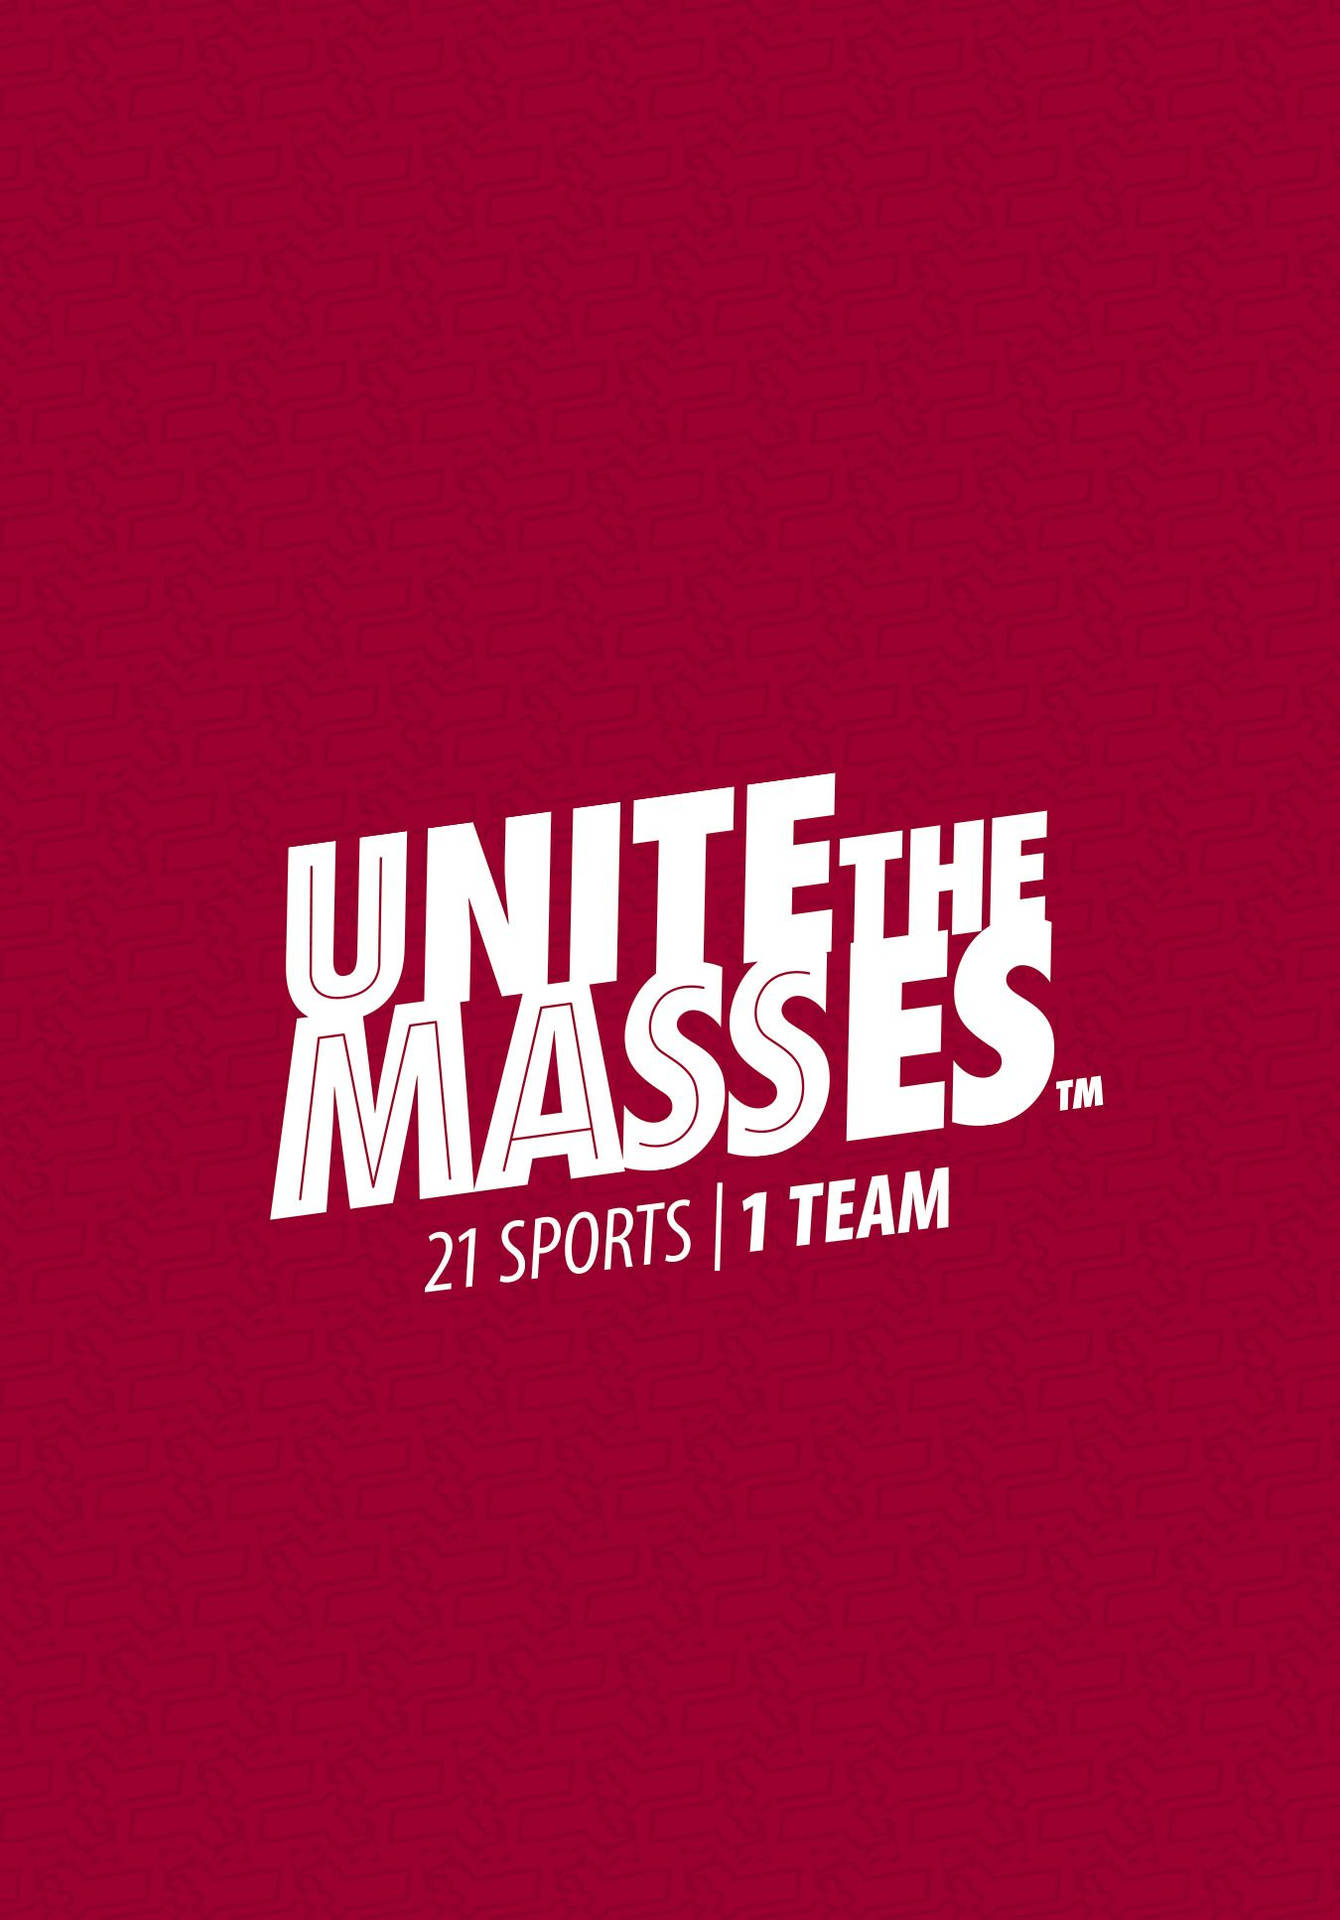 Universitetet af Massachusetts Team Banner Wallpaper